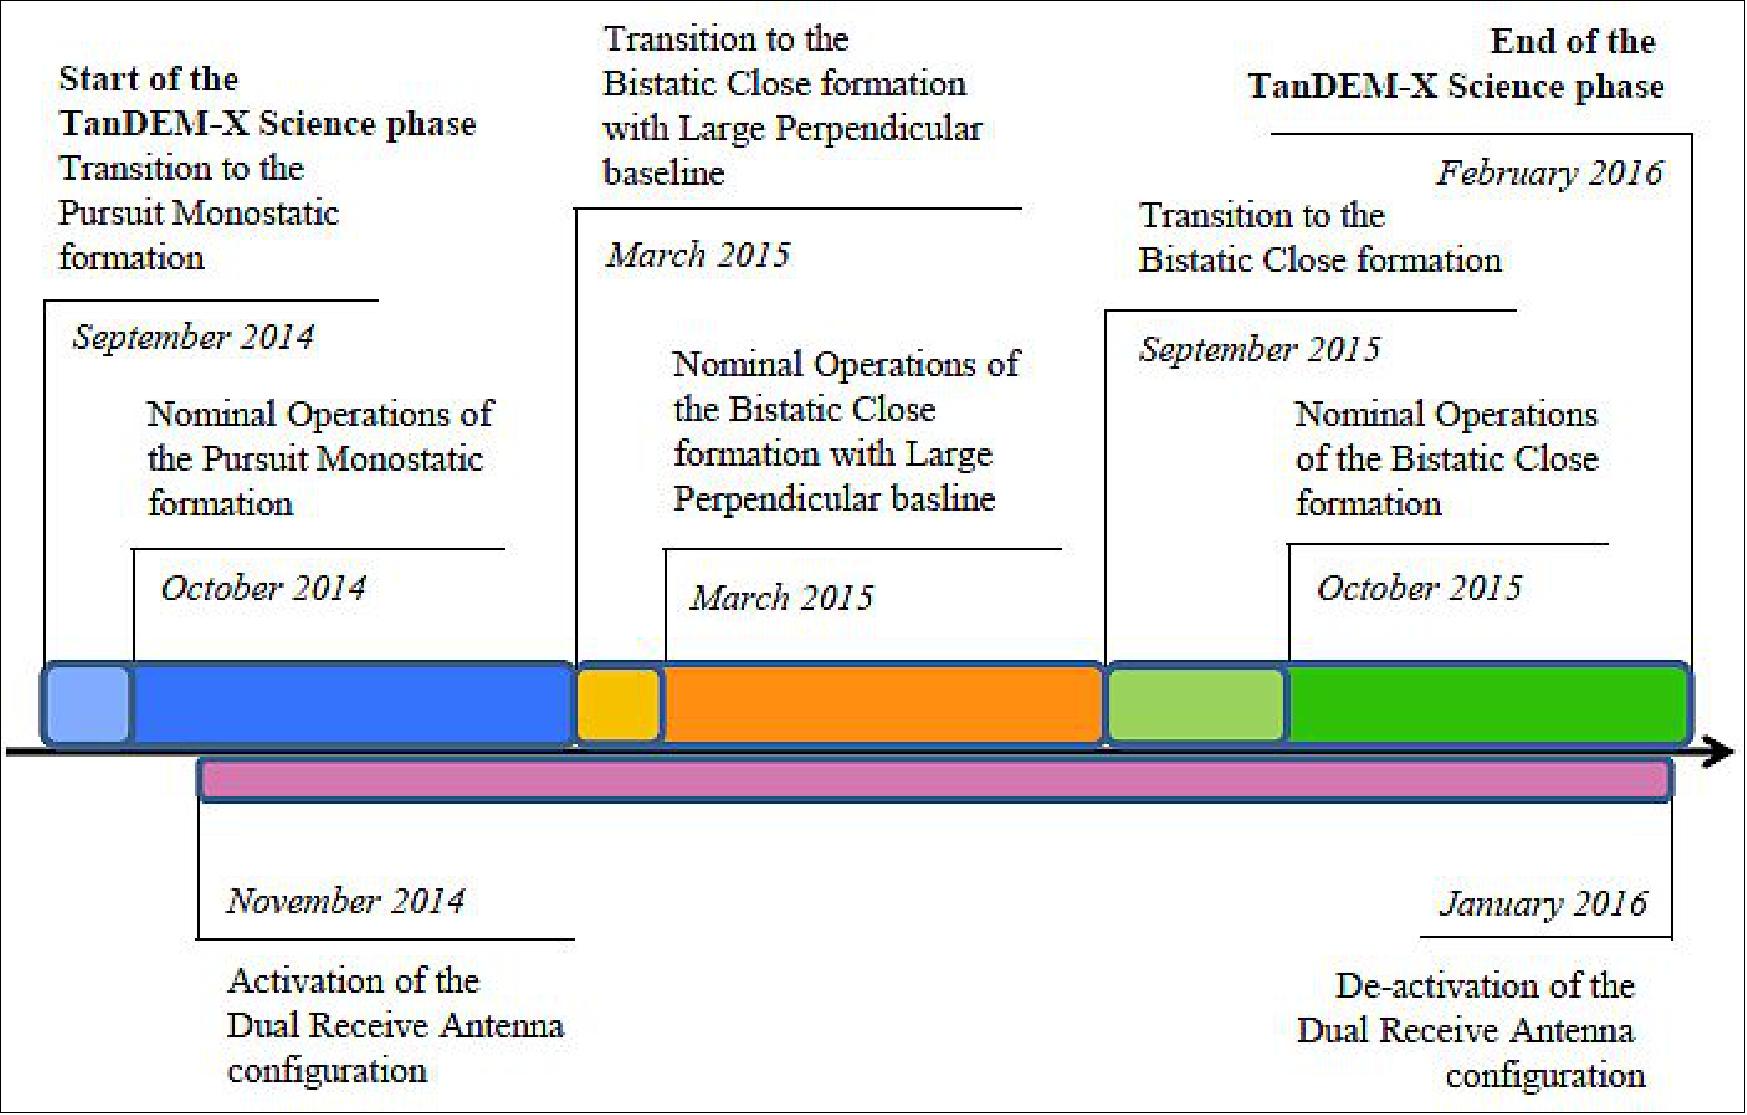 Figure 51: The TanDEM-X science phase timeline (image credit: DLR)